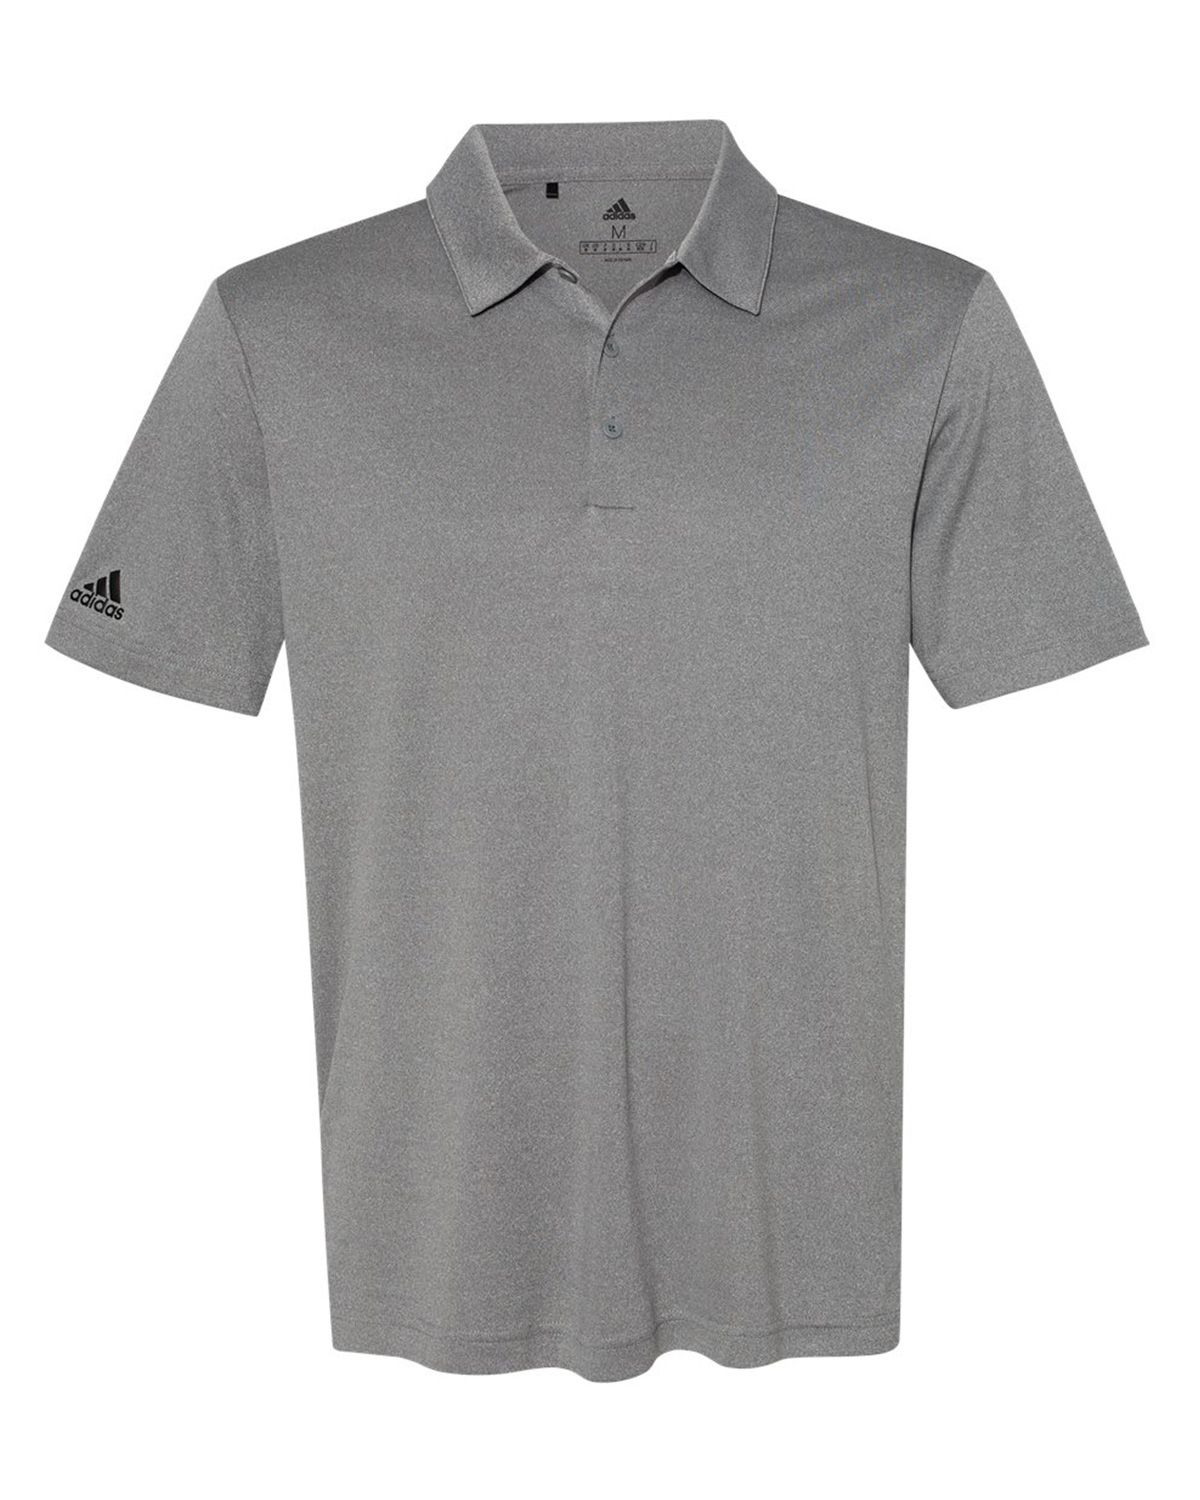 Adidas Golf Polo Sports Shirts Wholesale – ApparelnBags